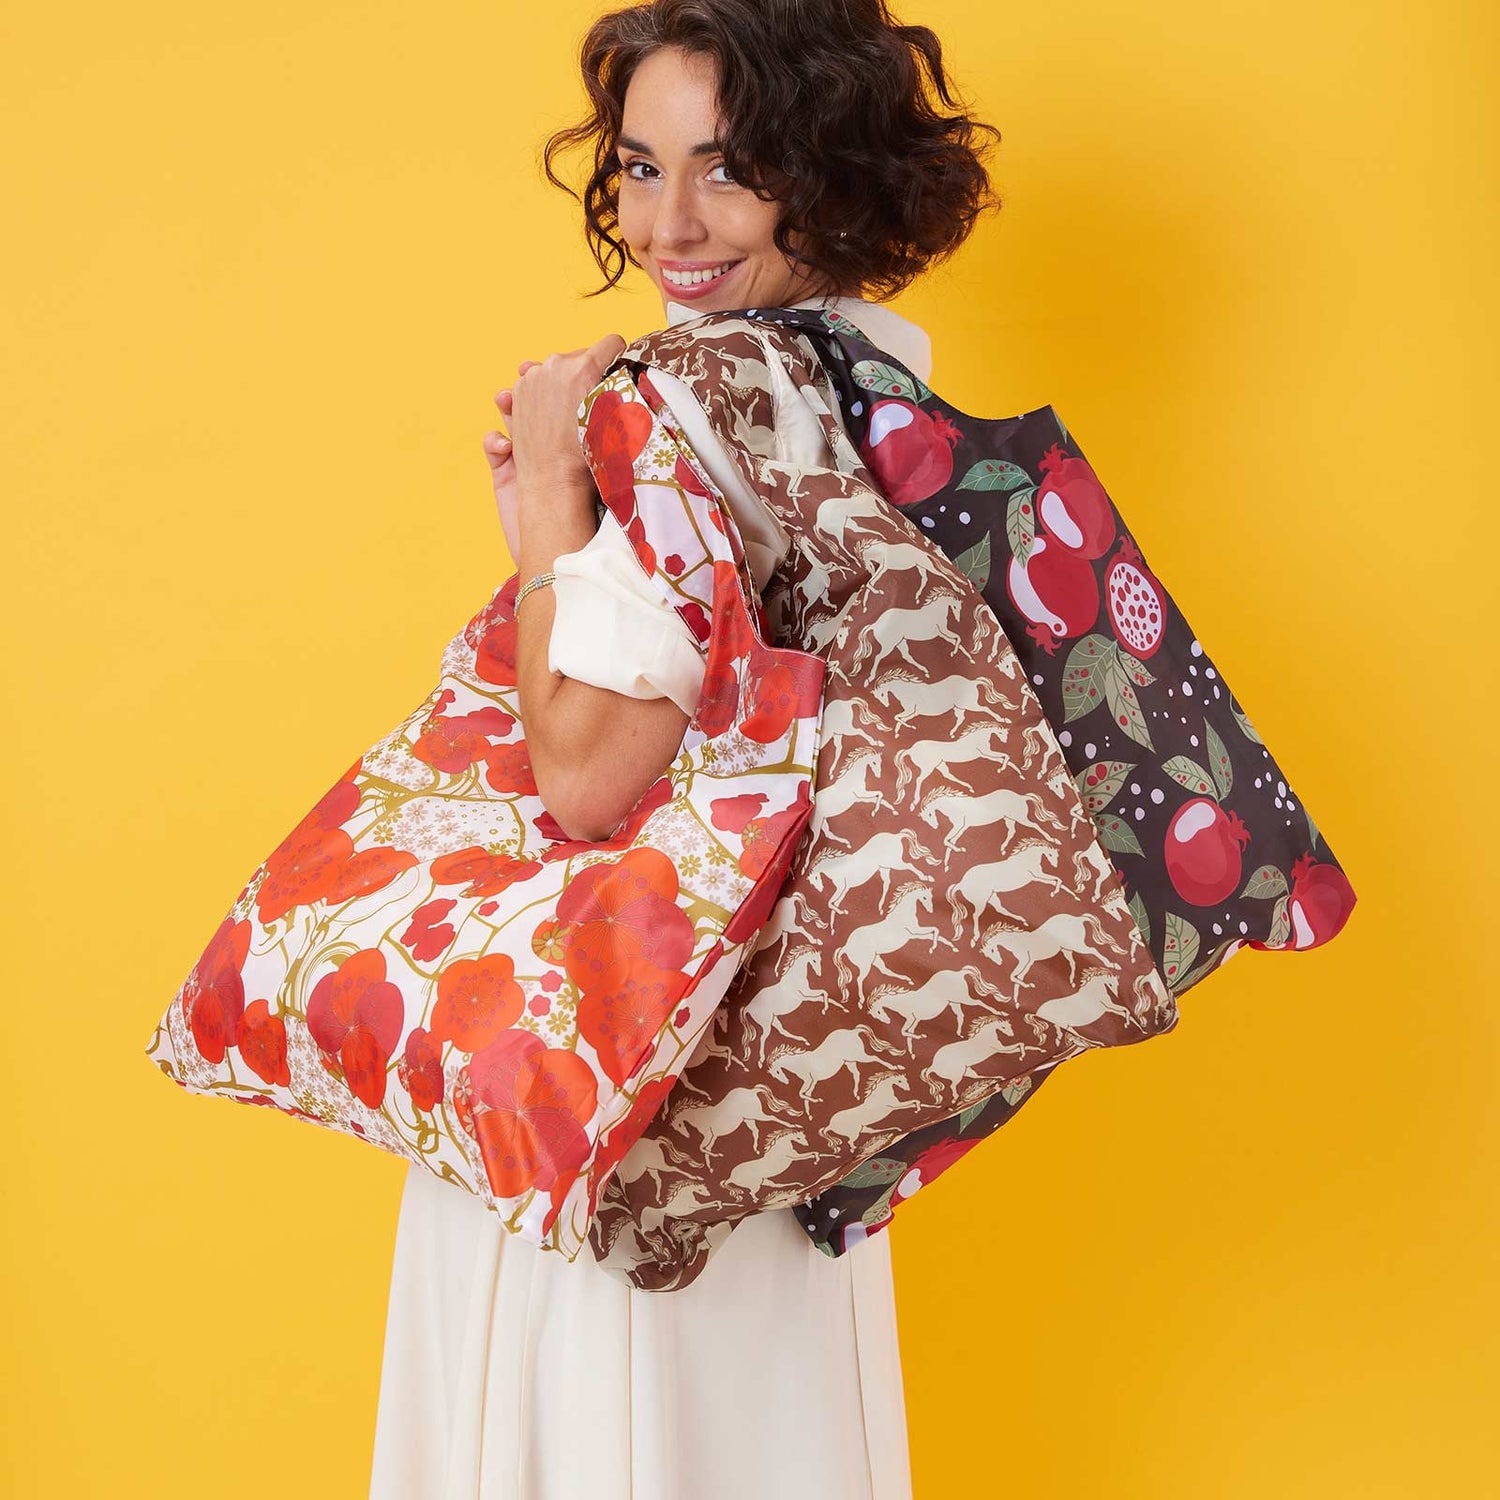 Kintsugi Blu Bag Reusable Shopping Bag - Machine Washable Reusable Shopping Bag - rockflowerpaper